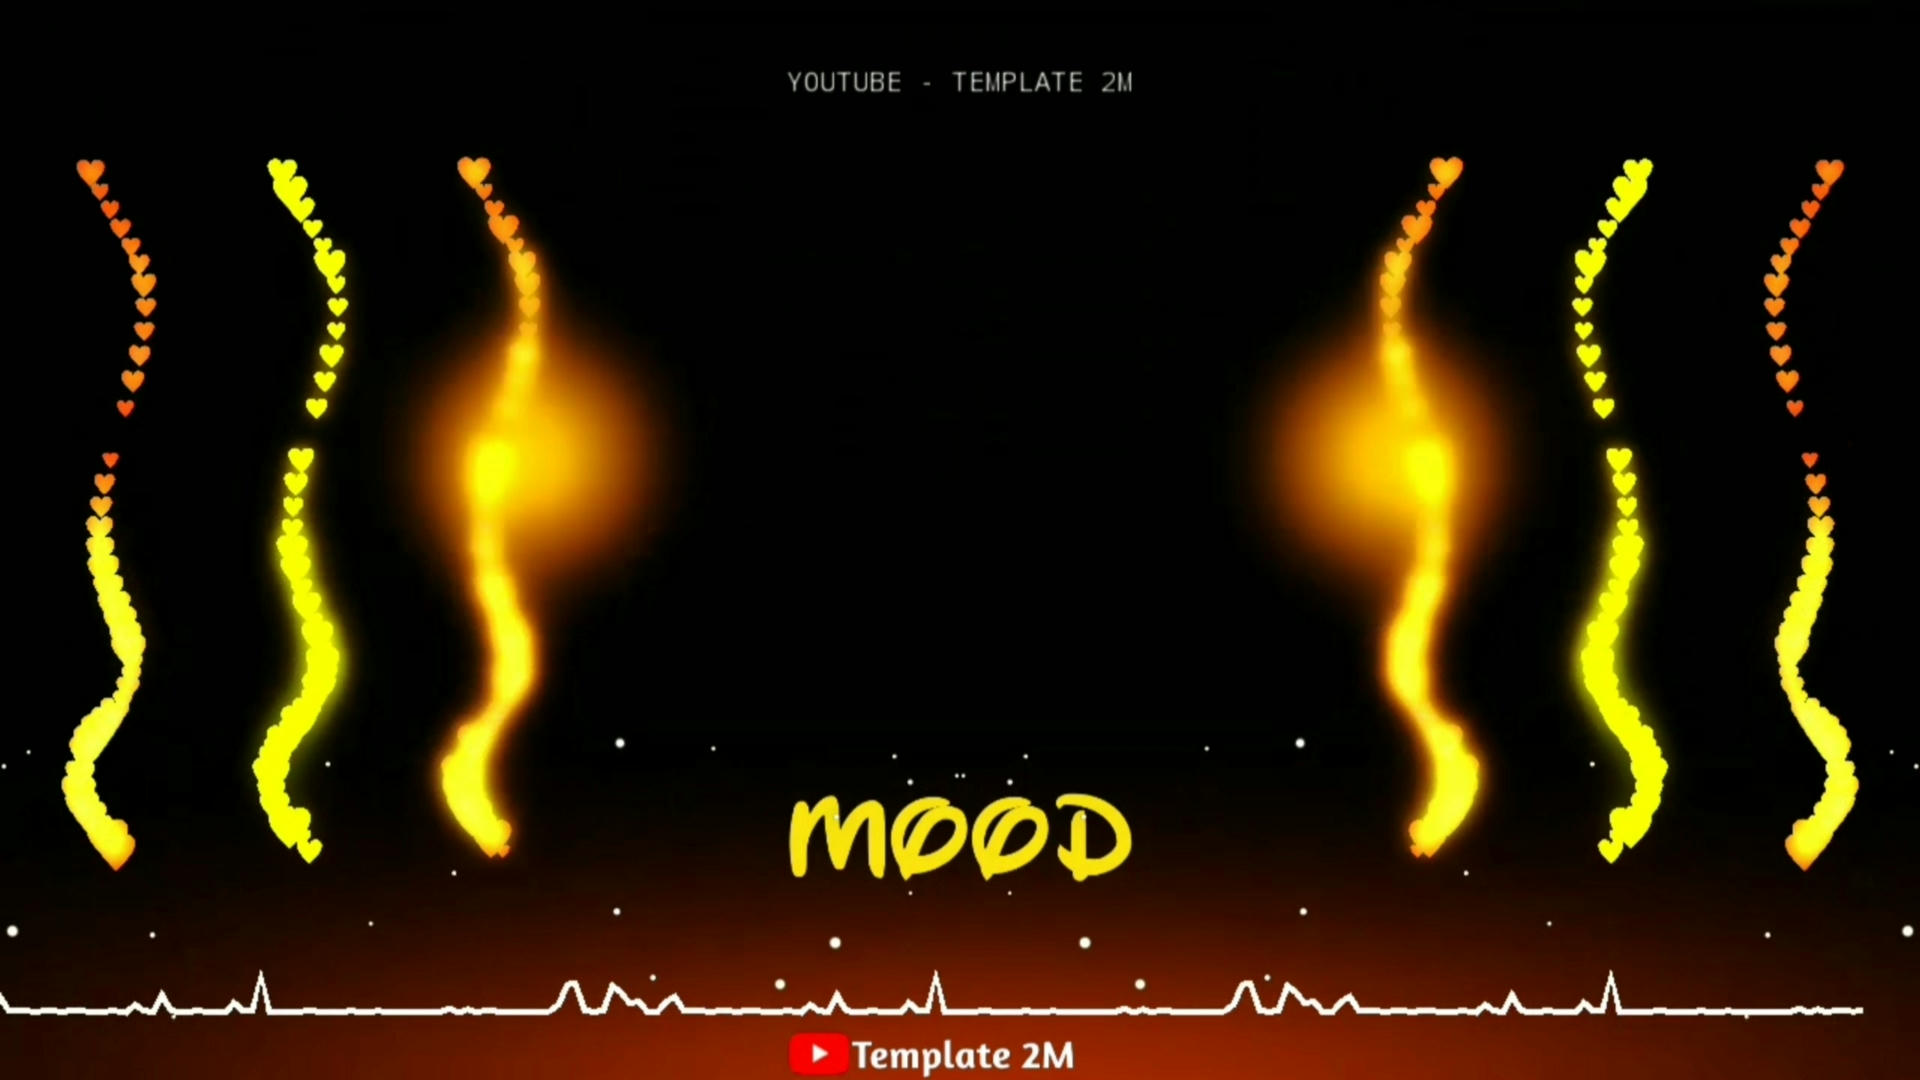 Mood Audio Spectrum Template